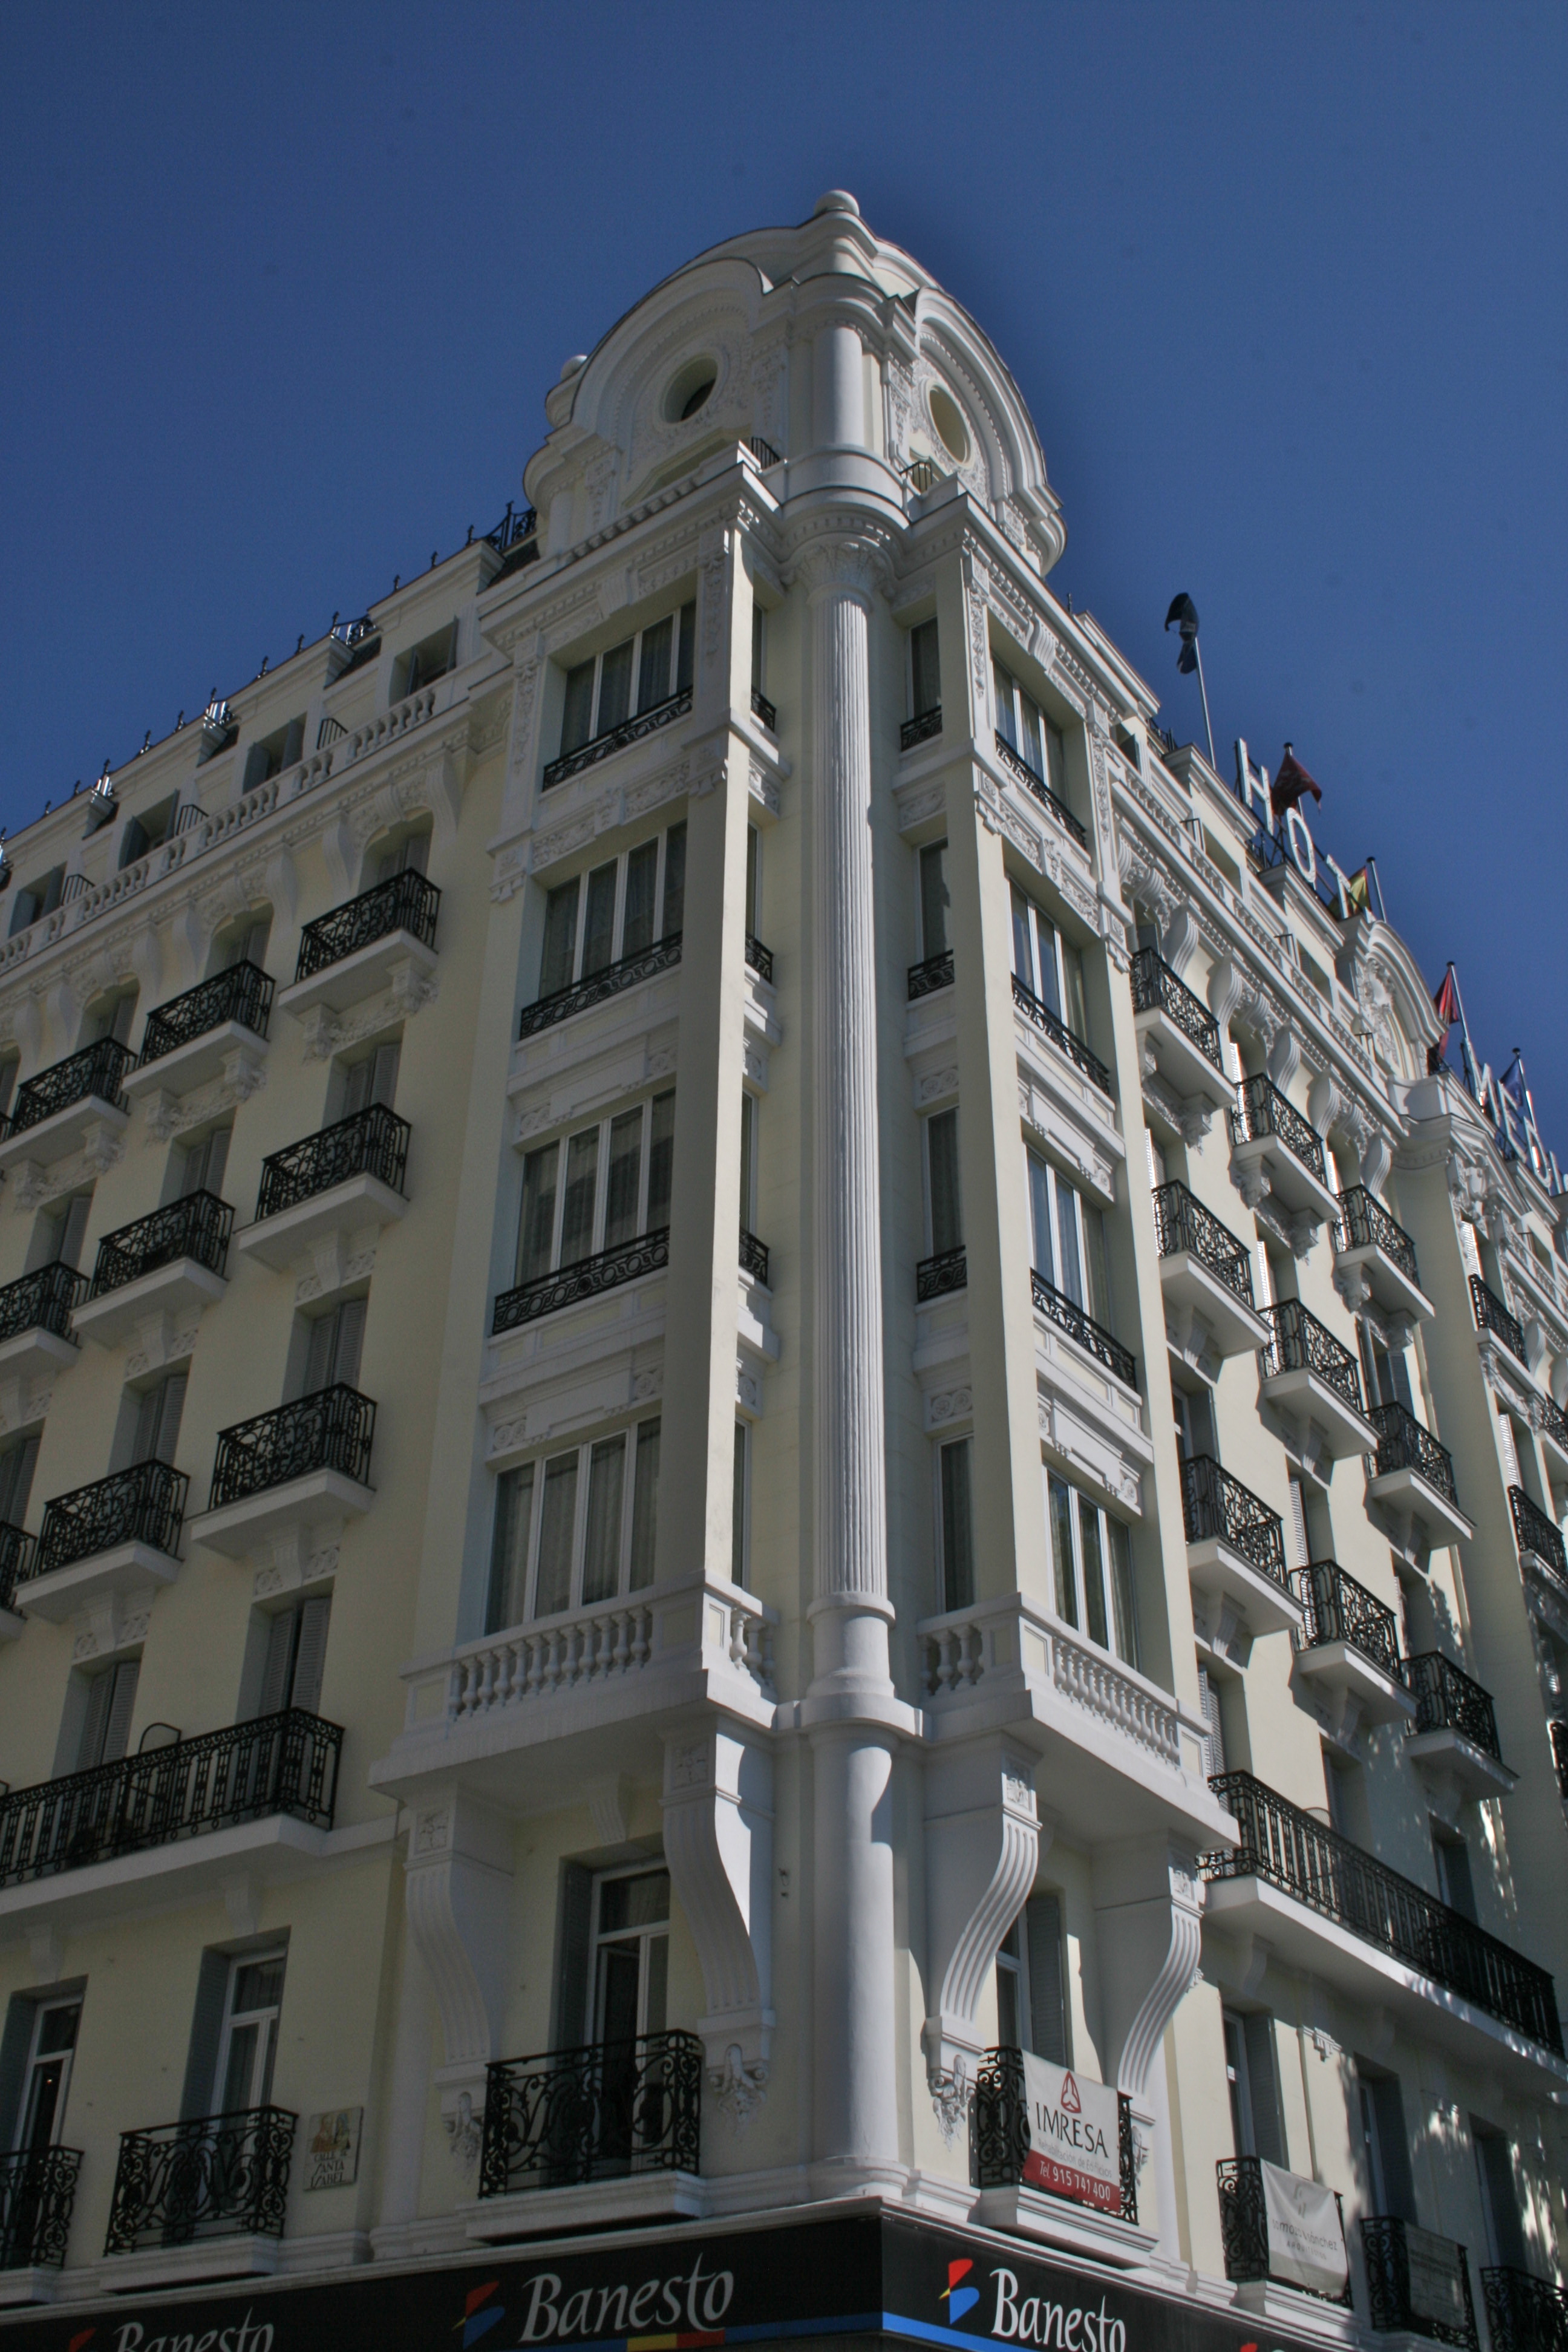 Hotel Mediodia Madrid